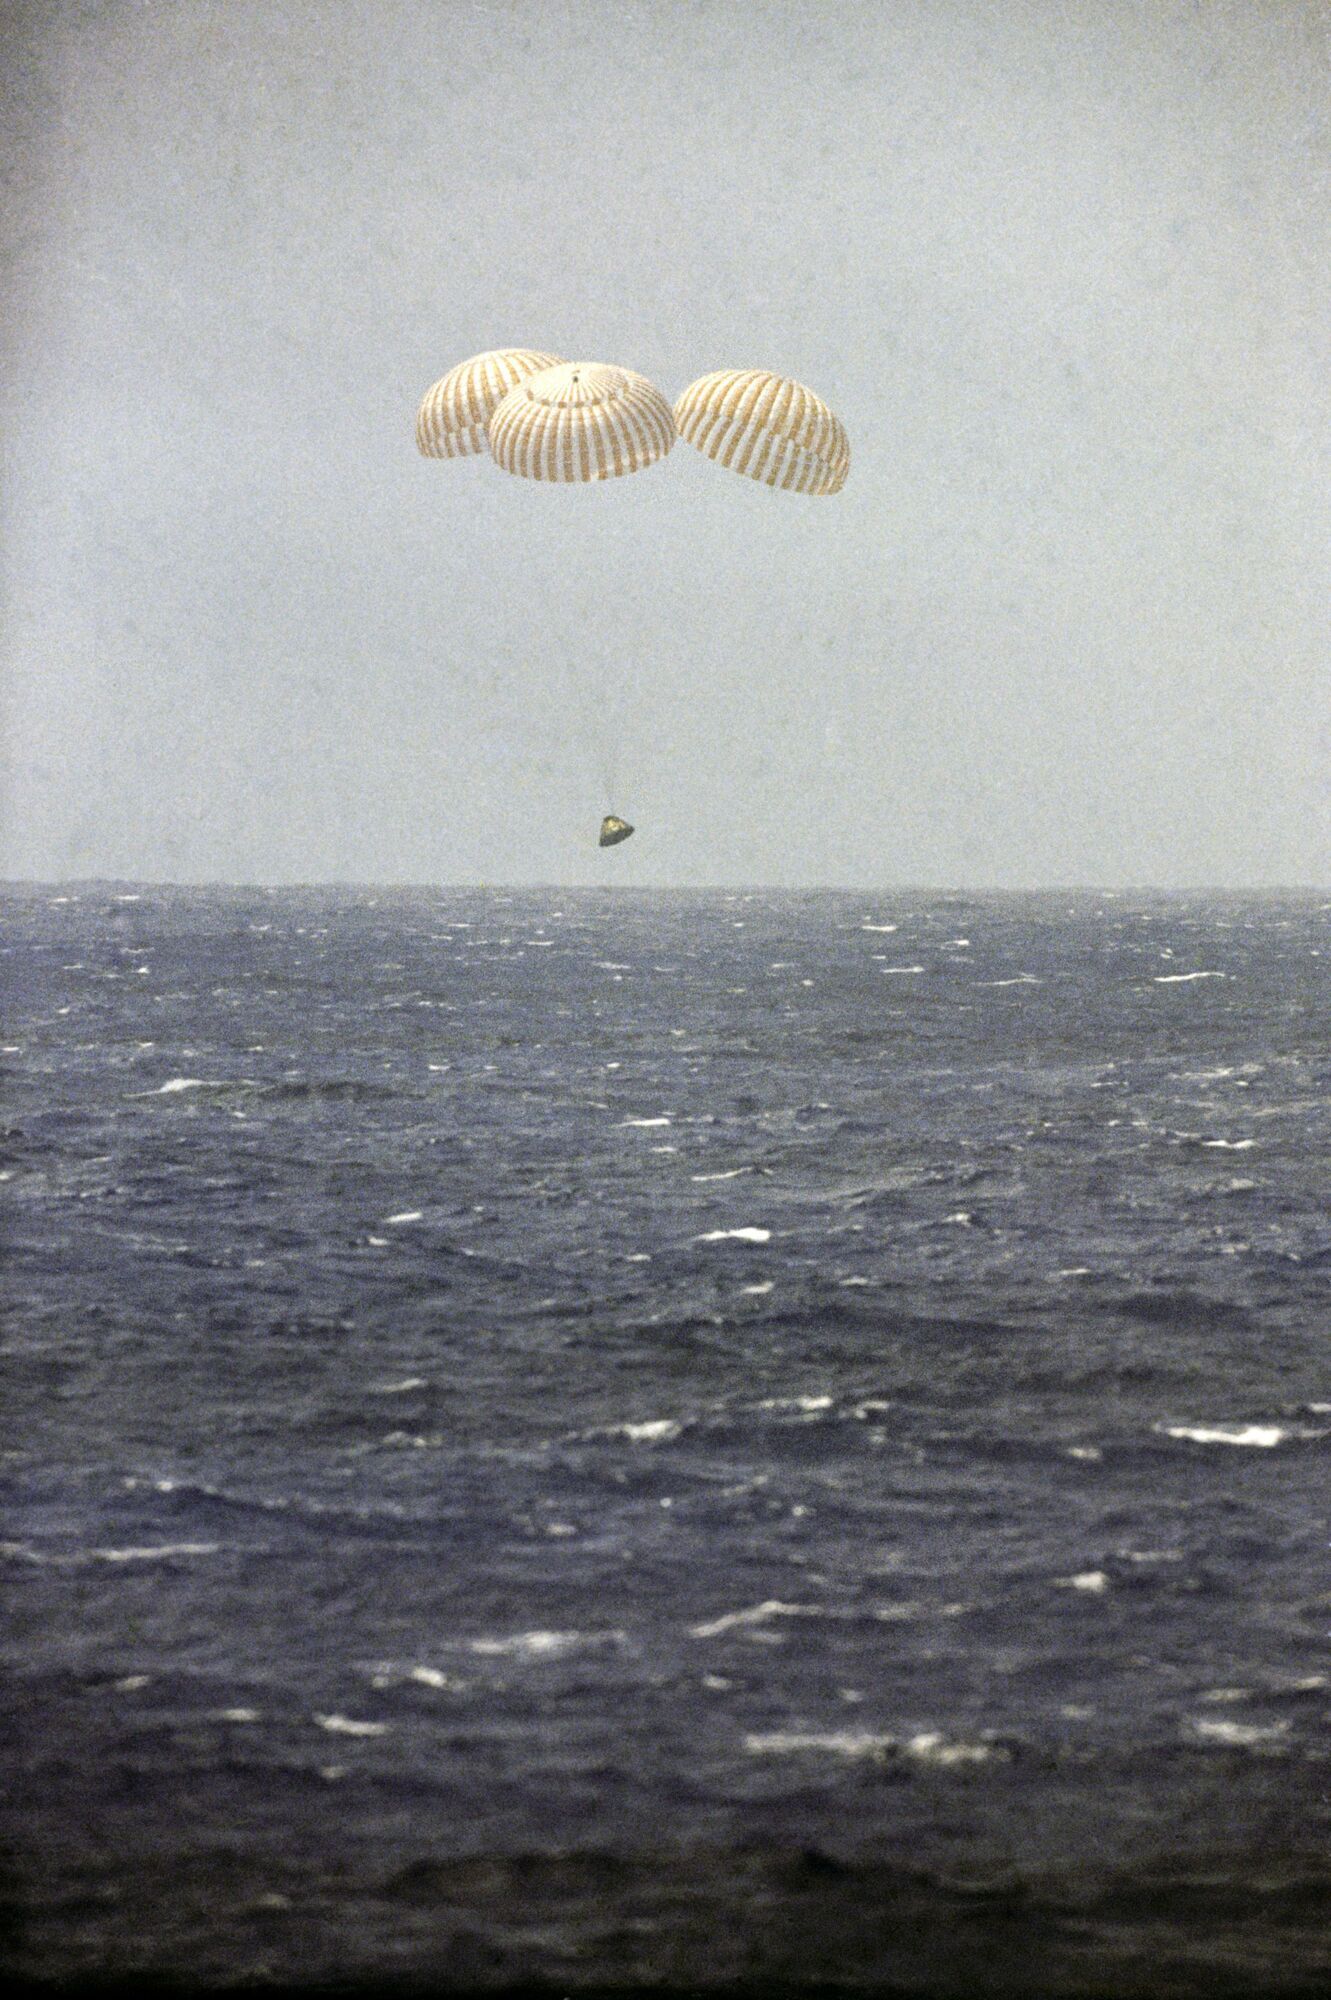 Splashdown after Apollo 12 mission